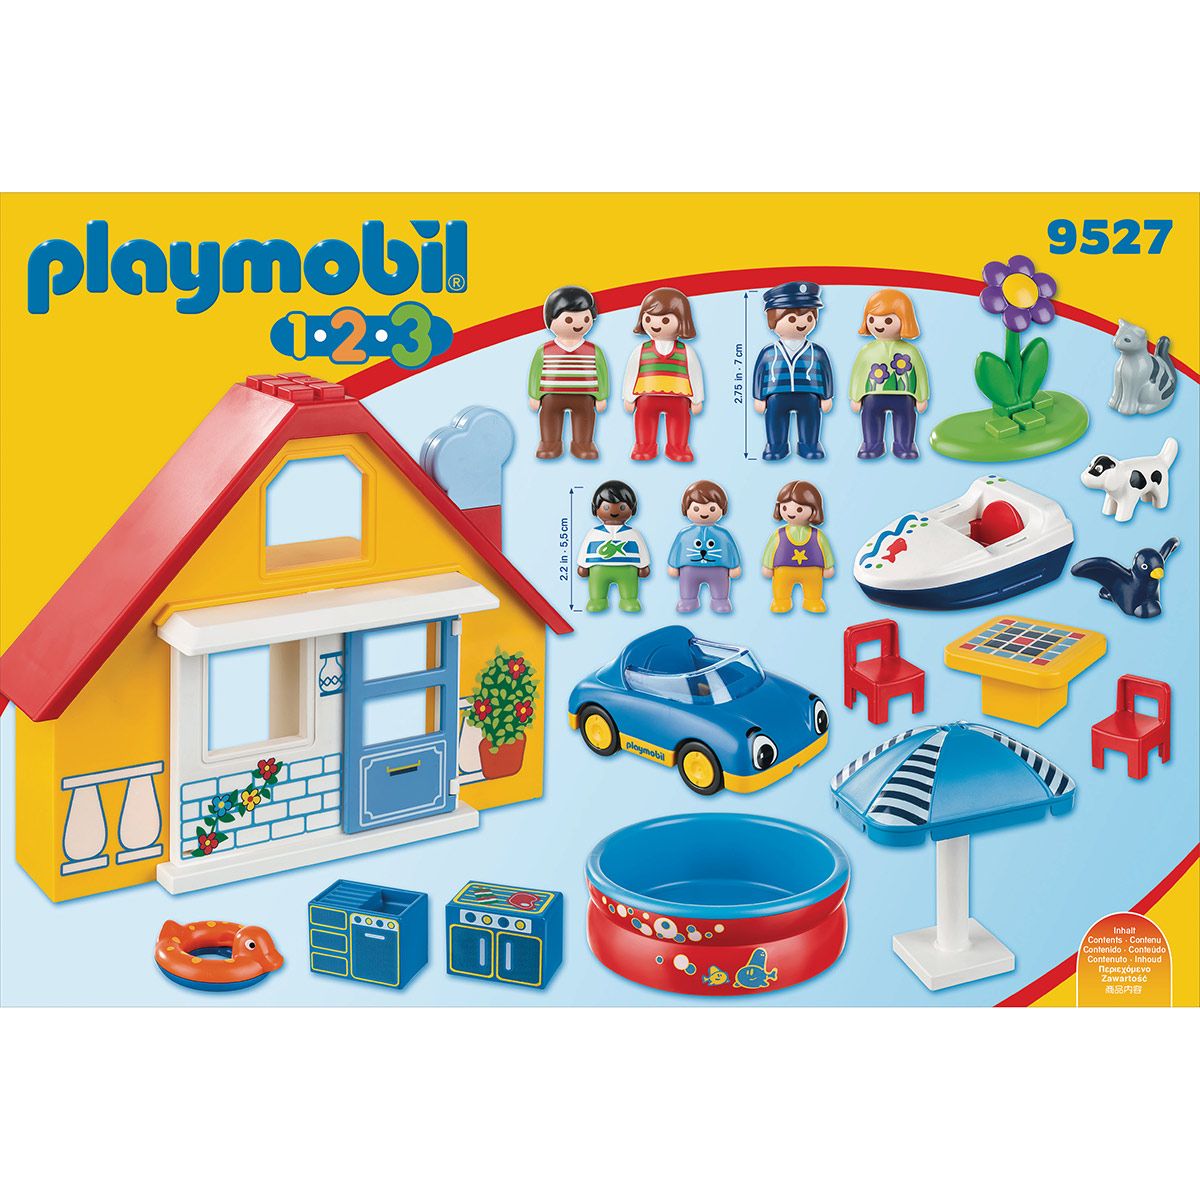 maison playmobil 123